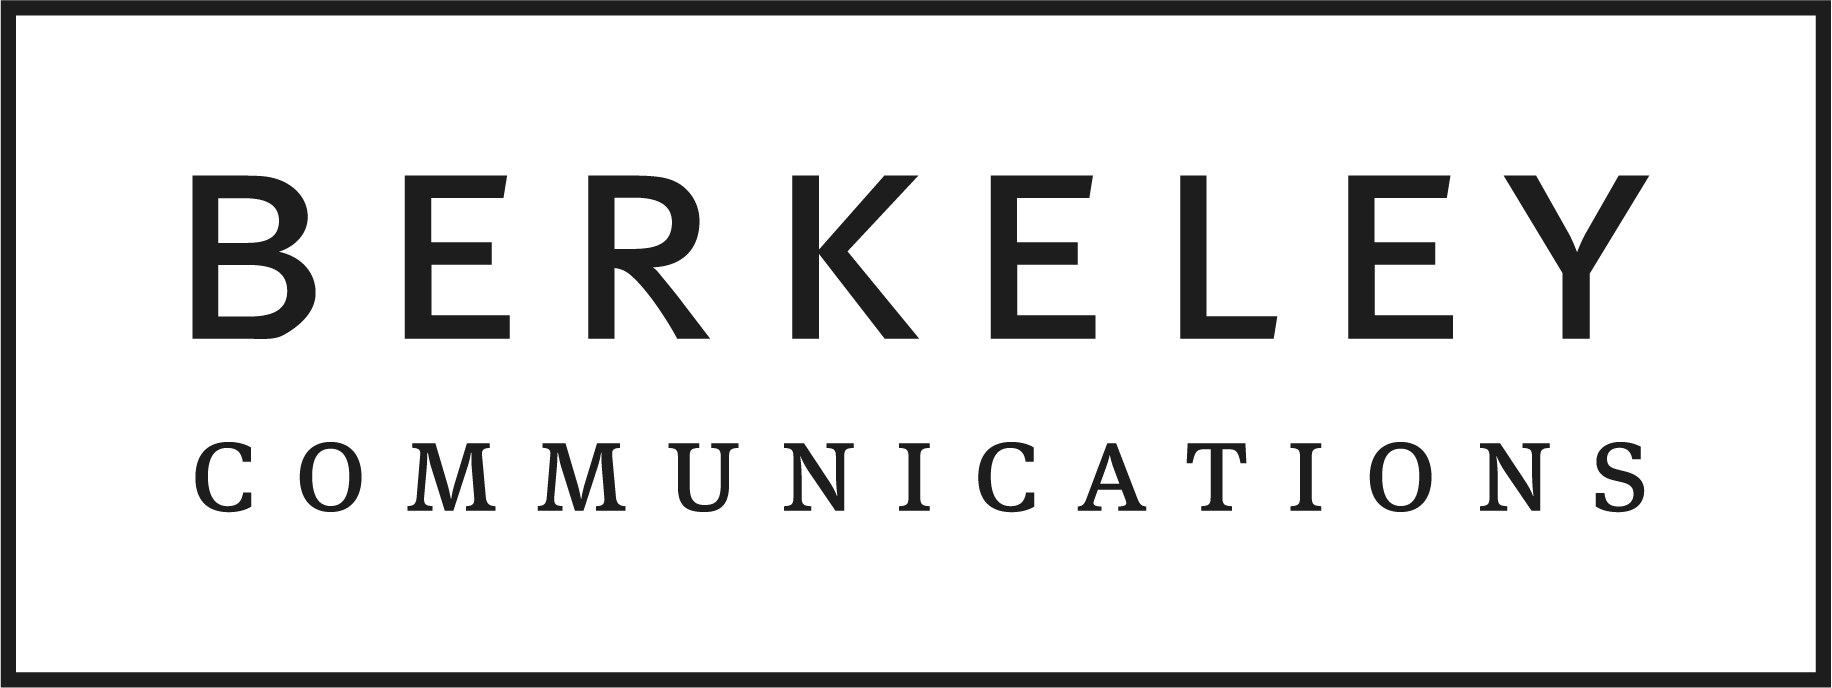 Berkeley Kommunikation